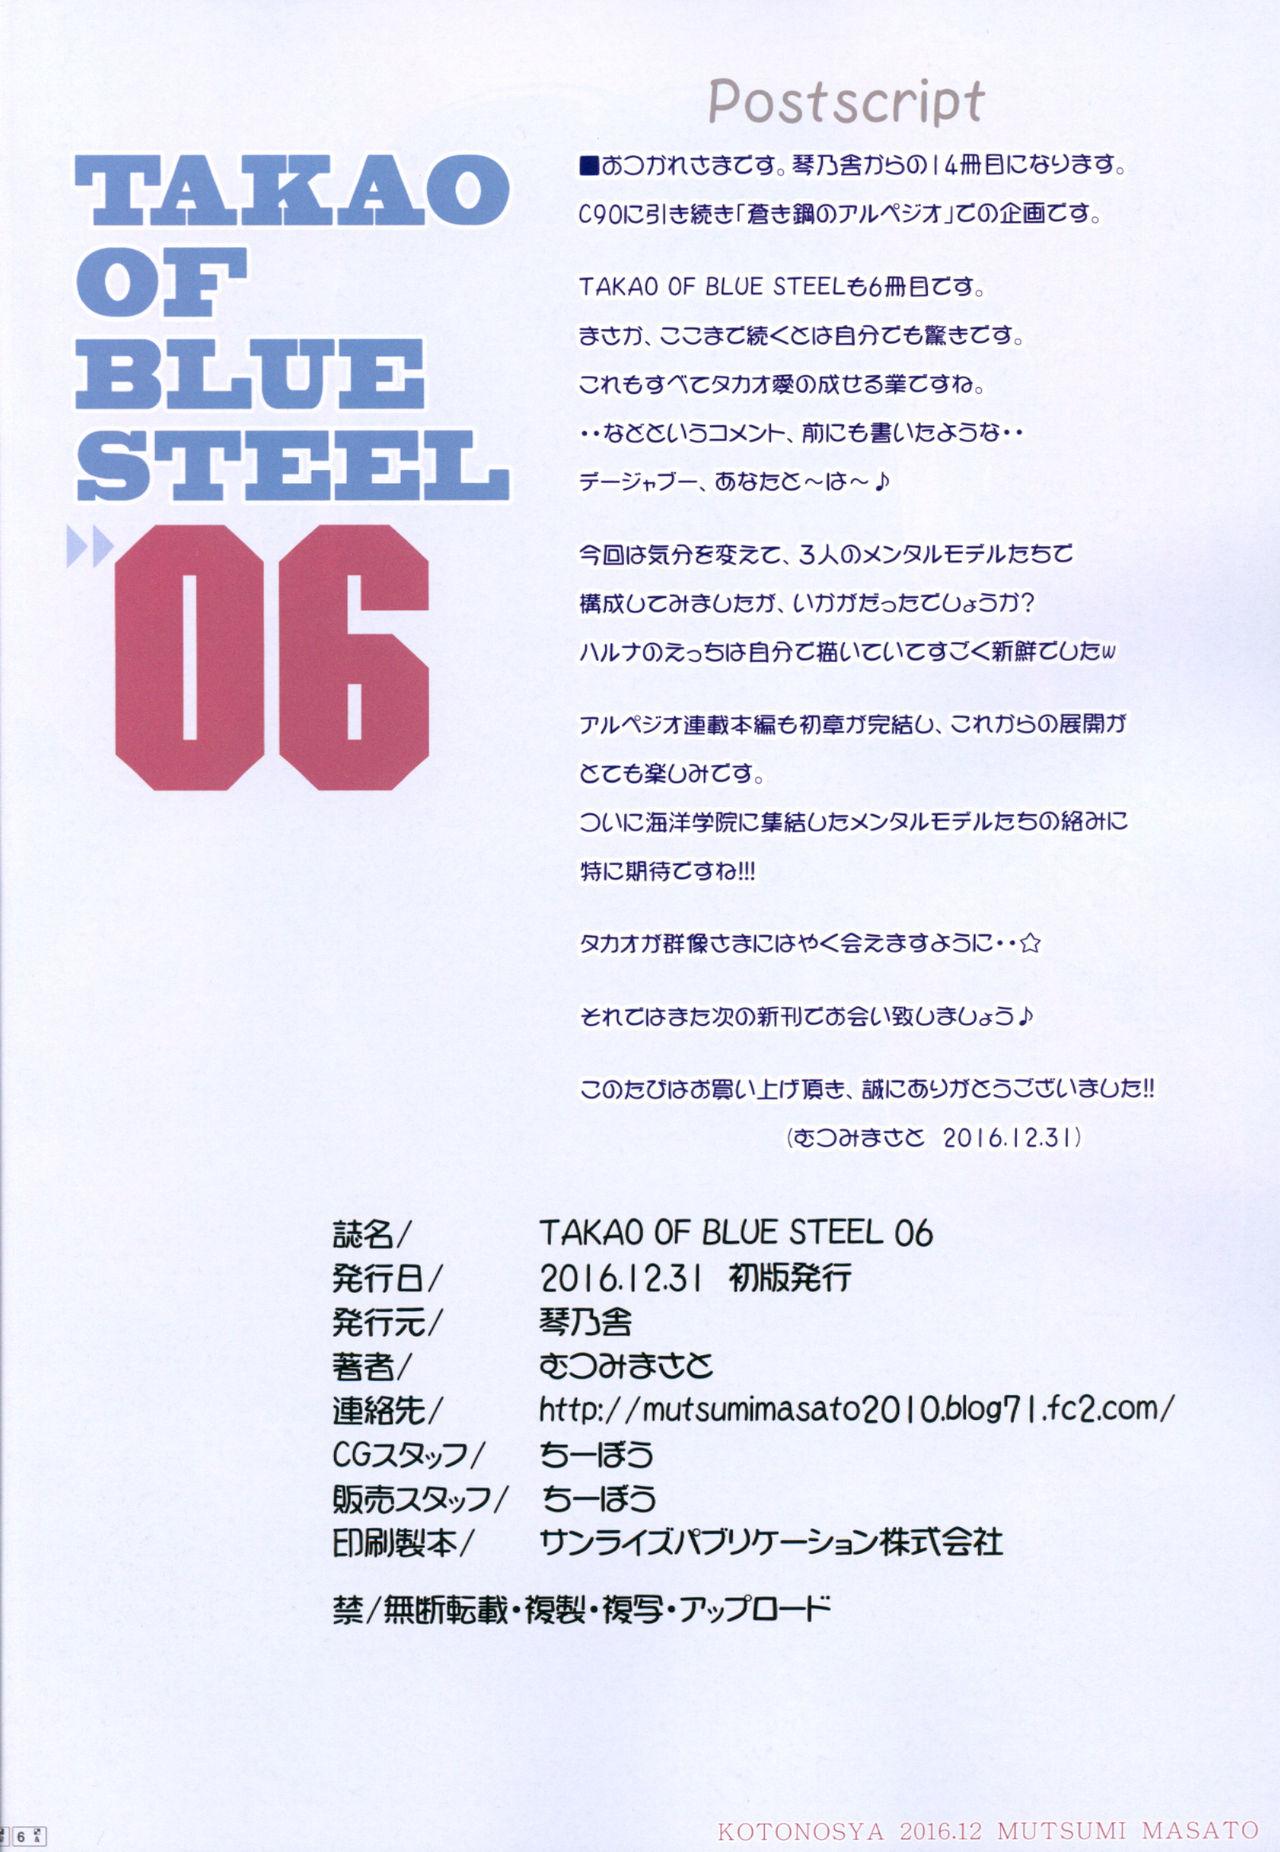 TAKAO OF BLUE STEEL 06 24